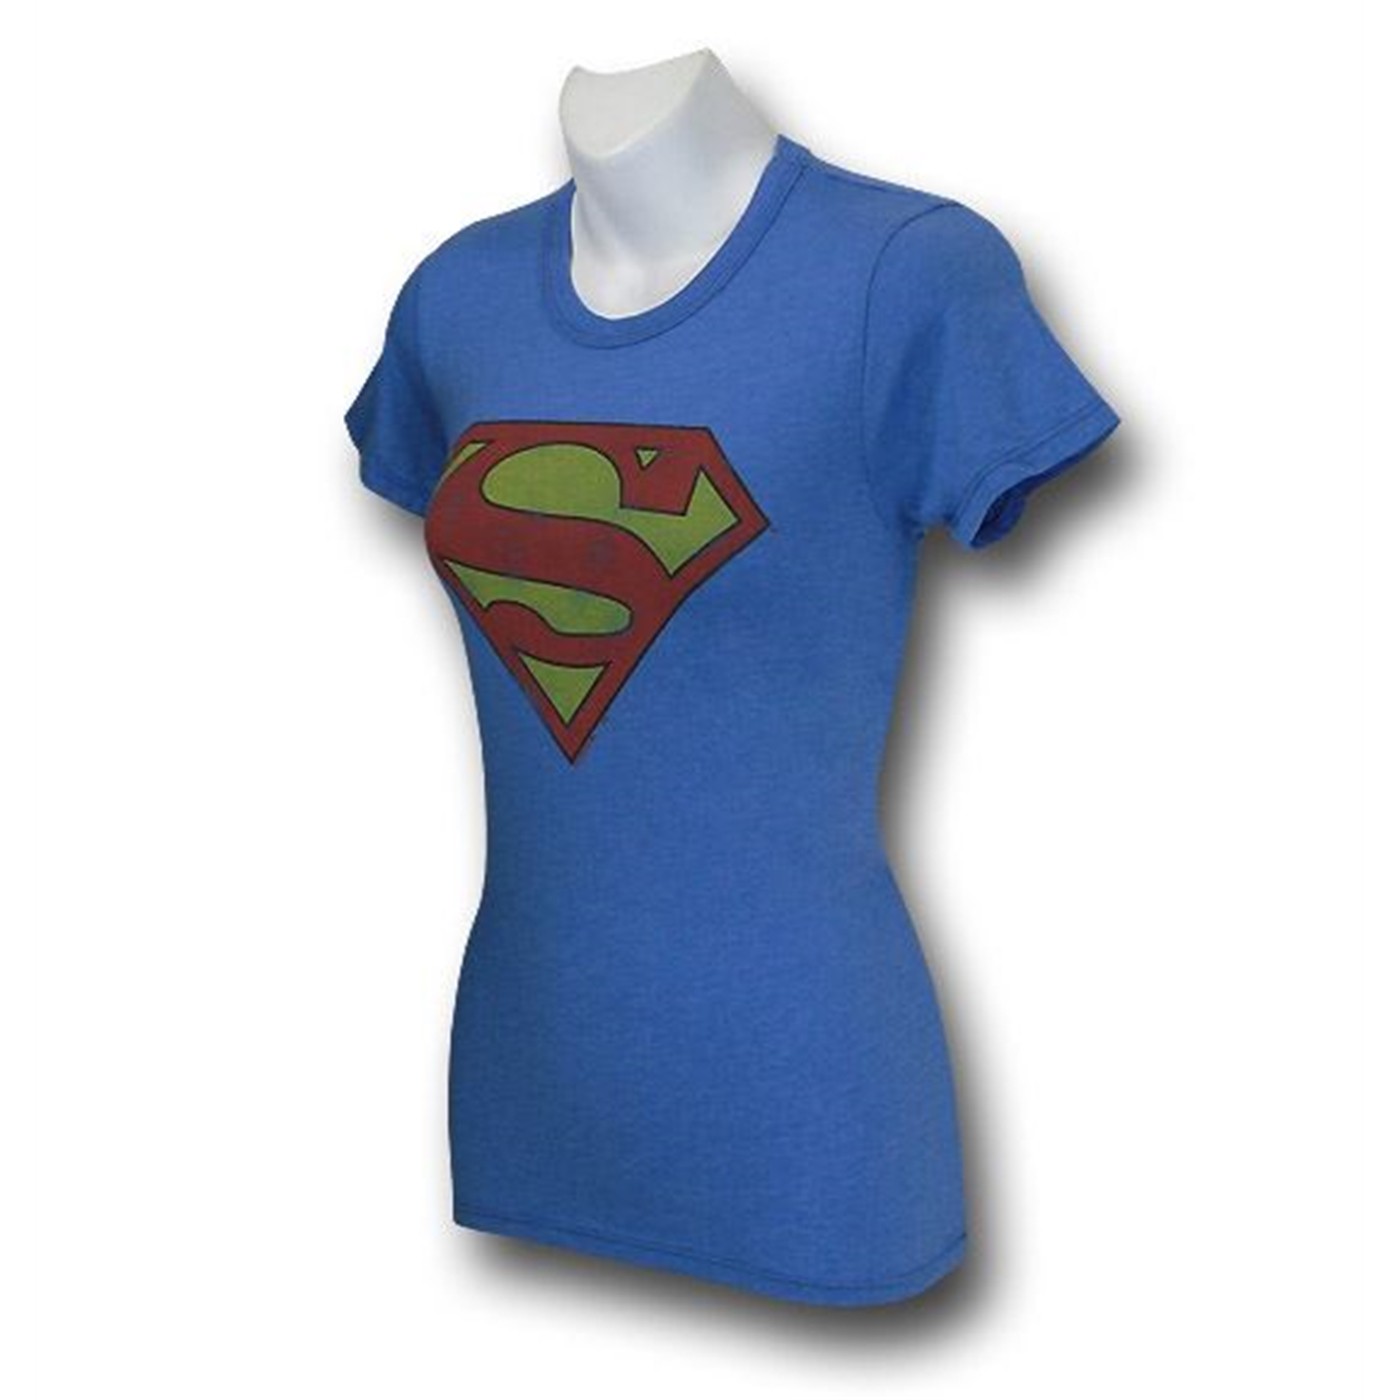 Superman Distressed Symbol Juniors Junk Food T-Shirt